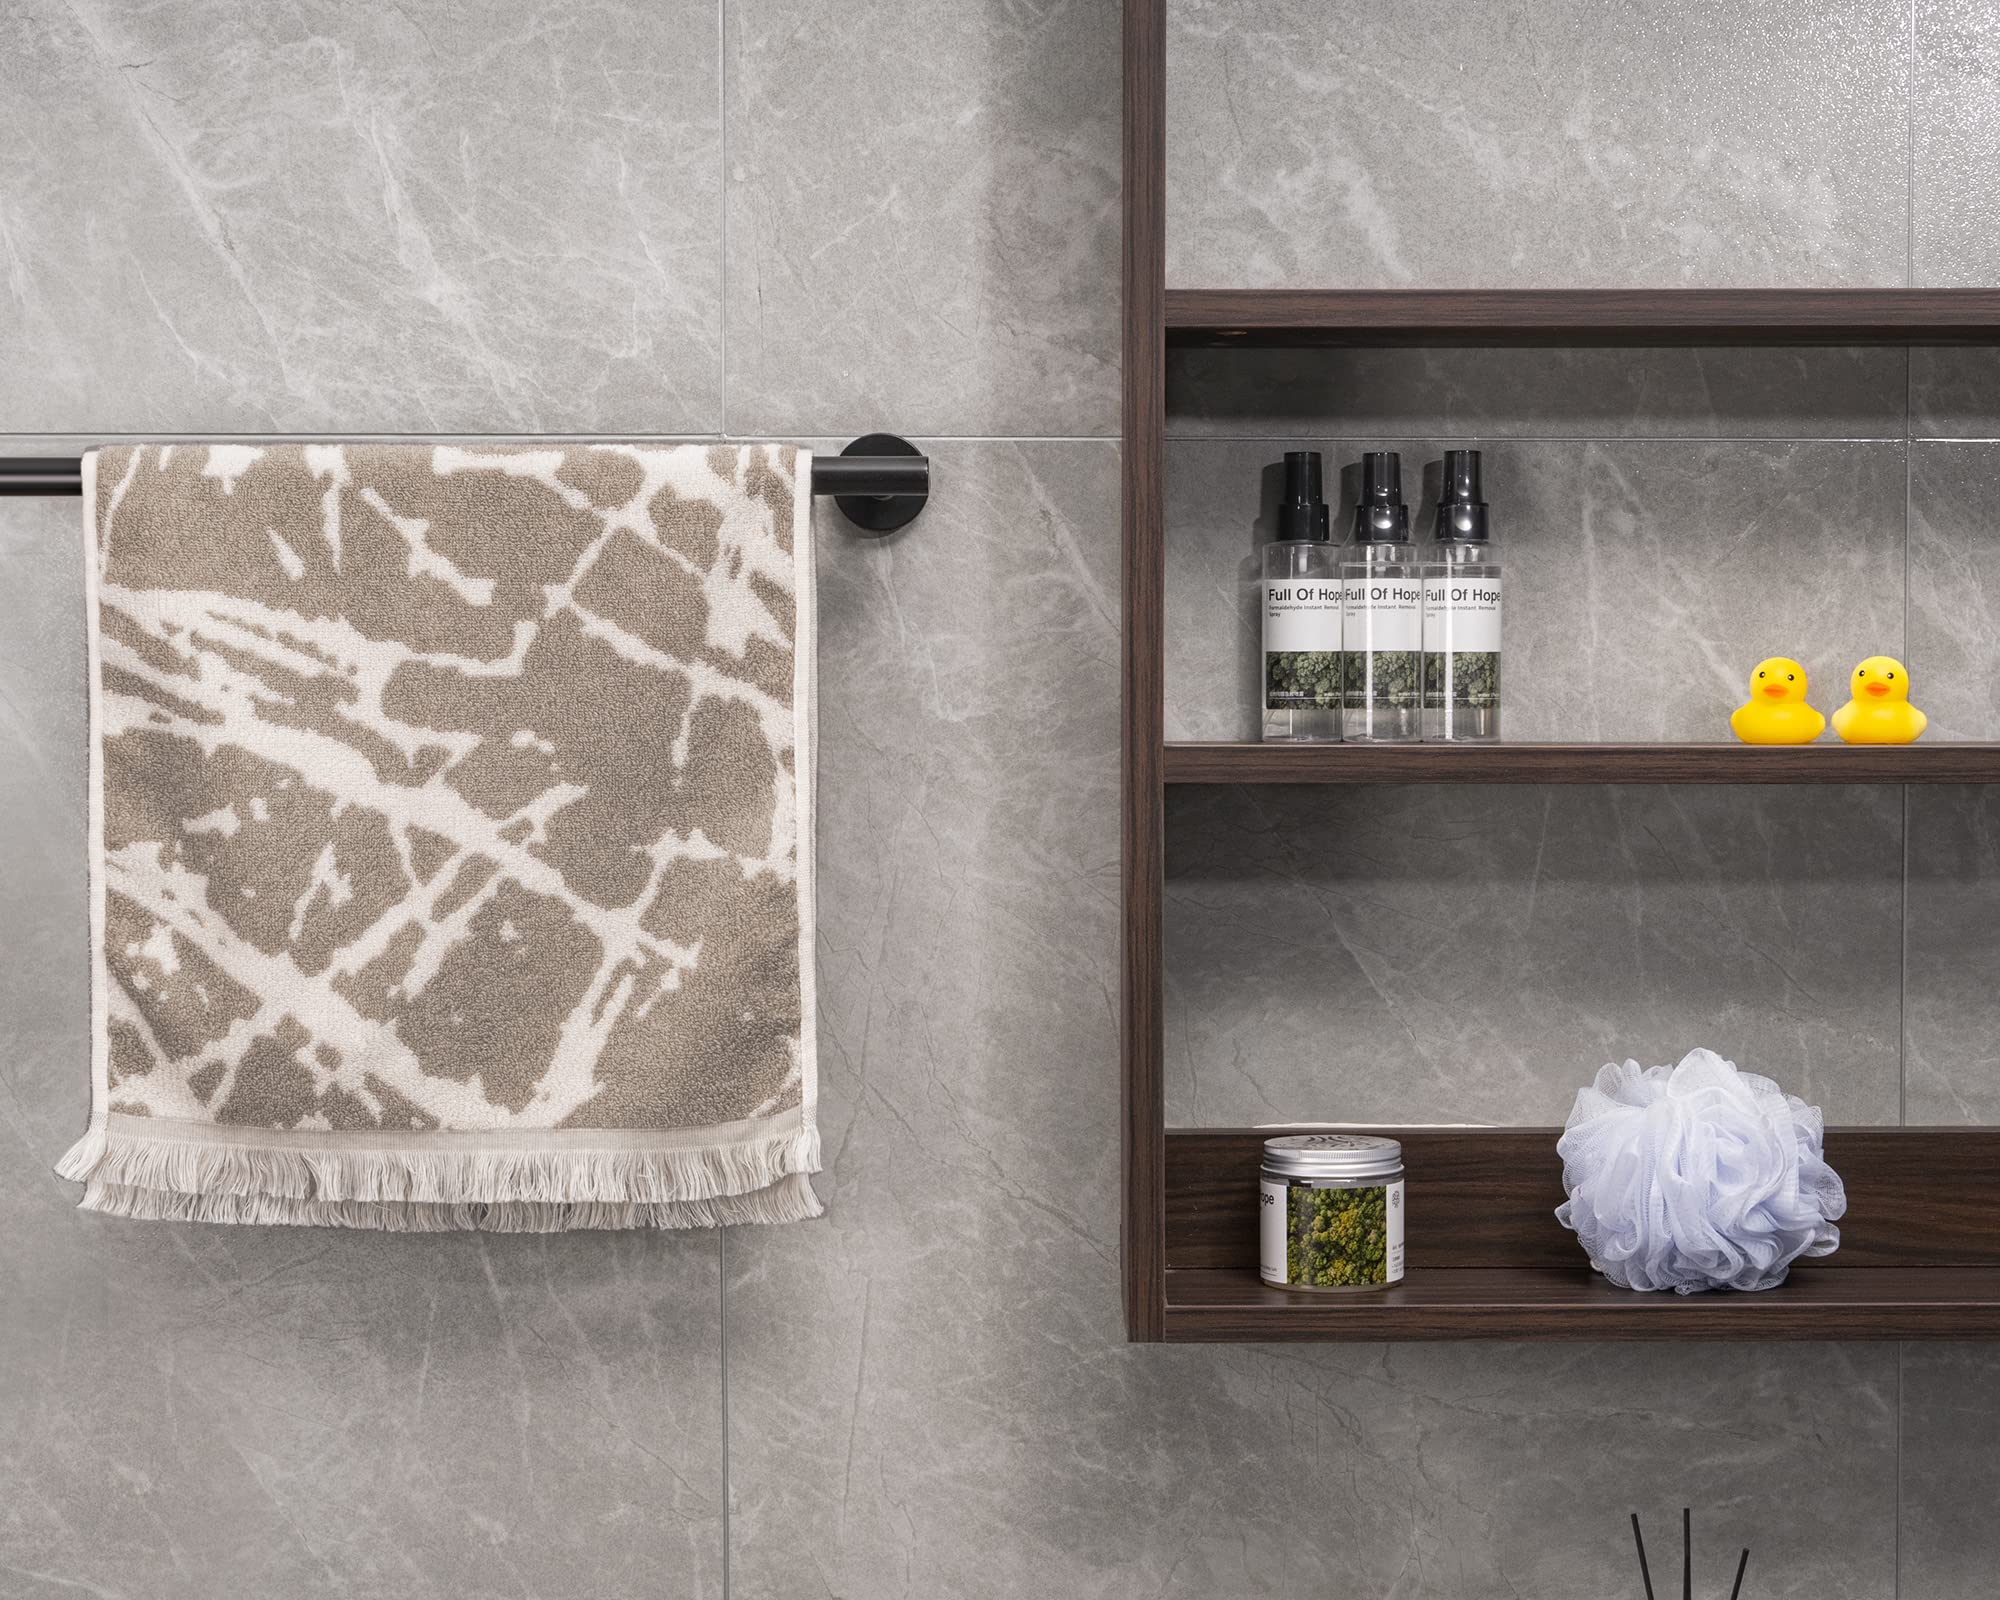 tower rack wall mounted towel bar bathroom stainless steel bath towel holder 31.6 inch black